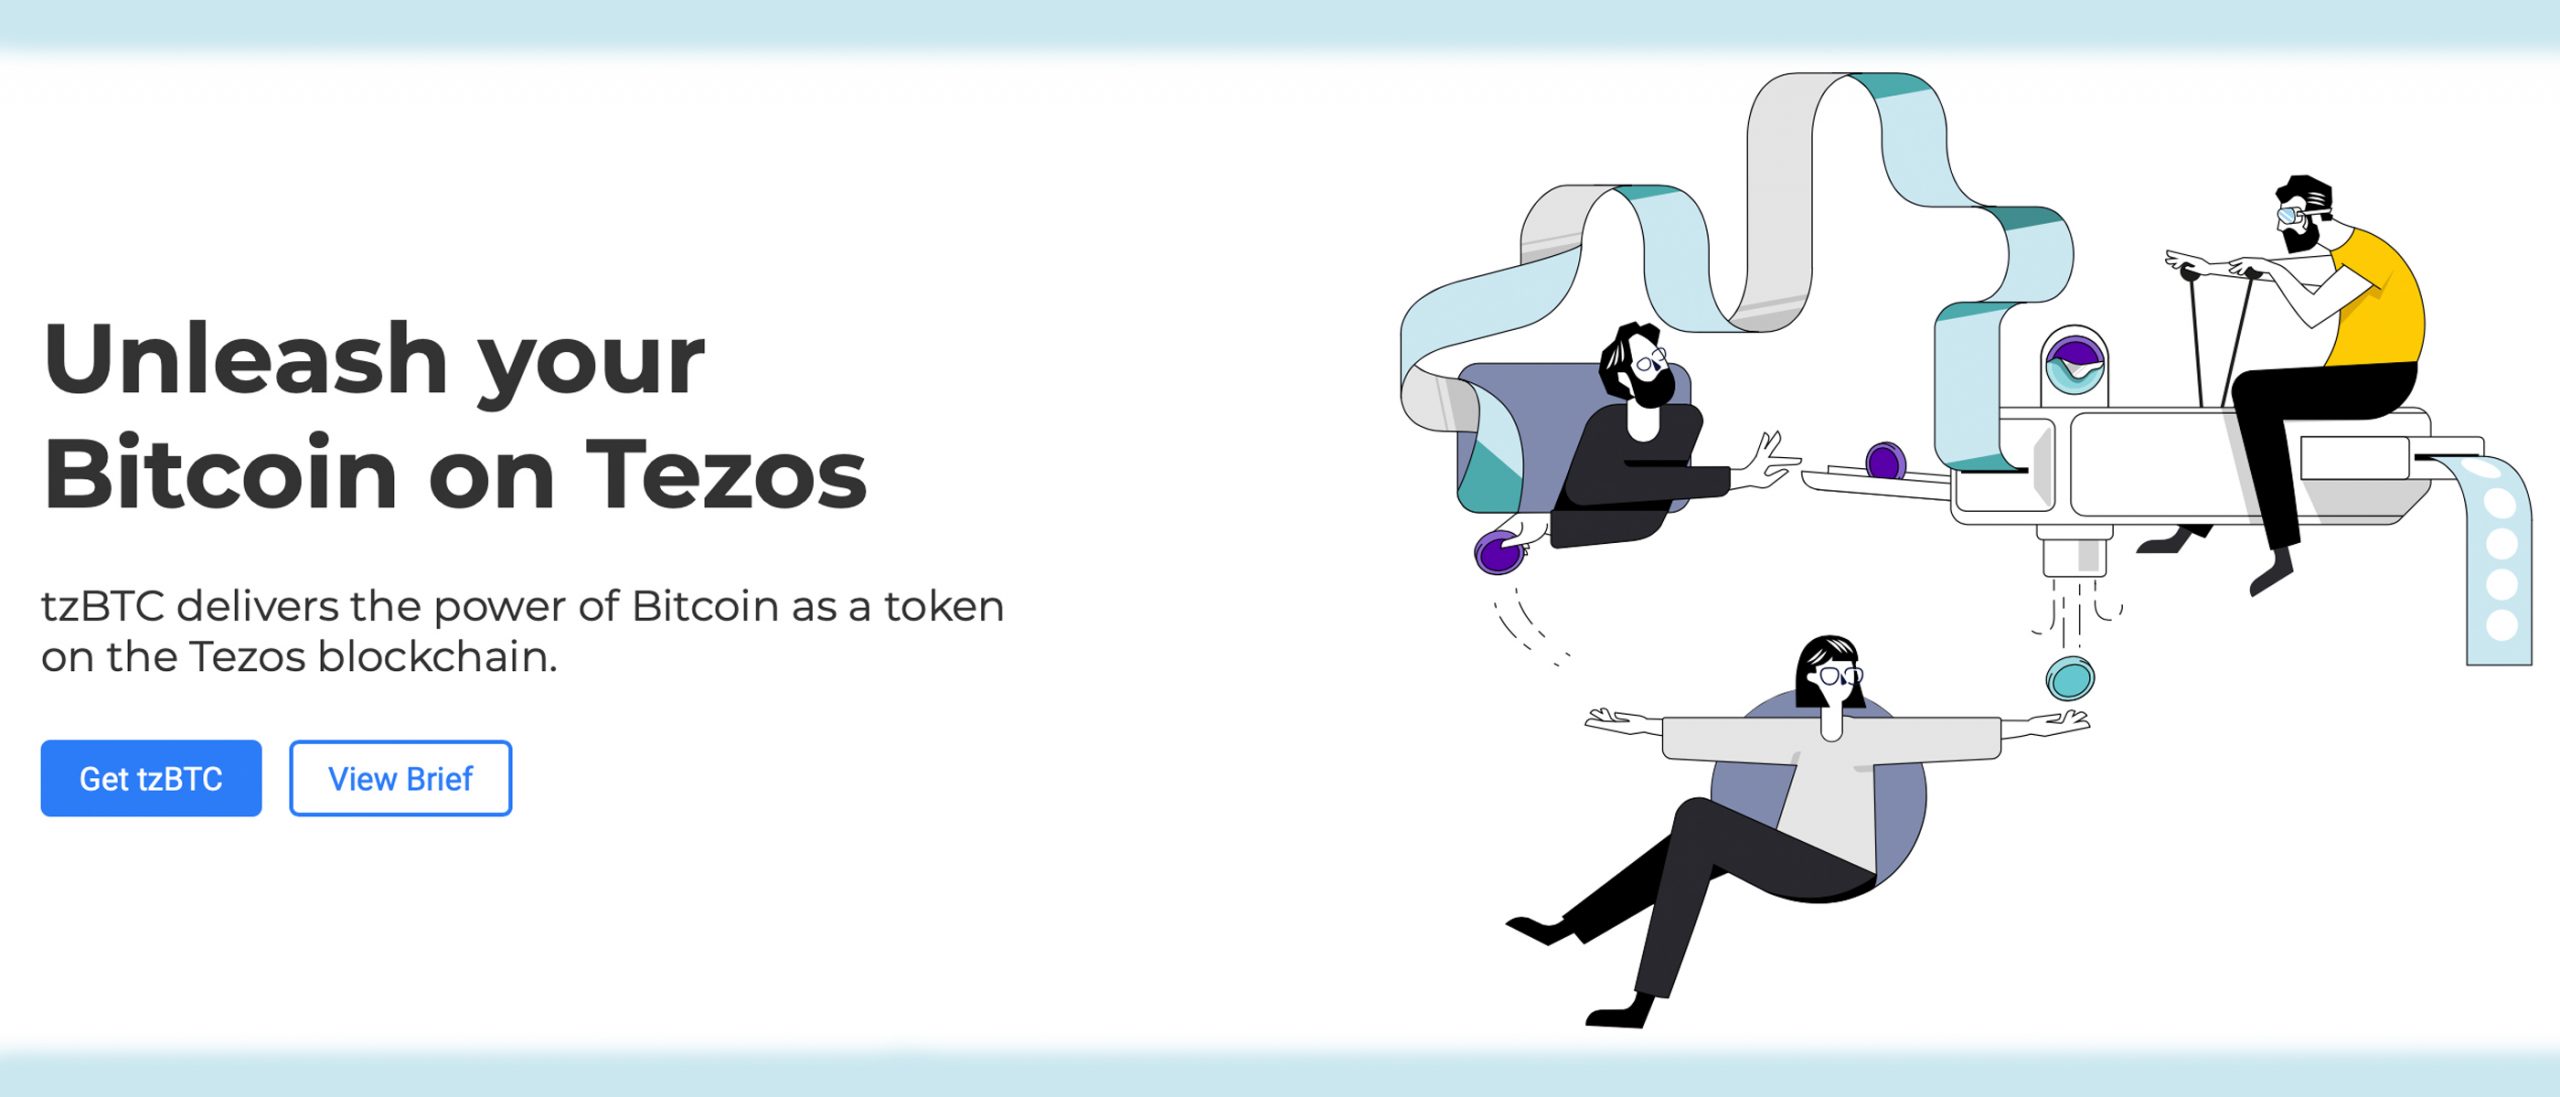 New Wrapped Bitcoin Platform Allows You to Transact in BTC Using Tezos